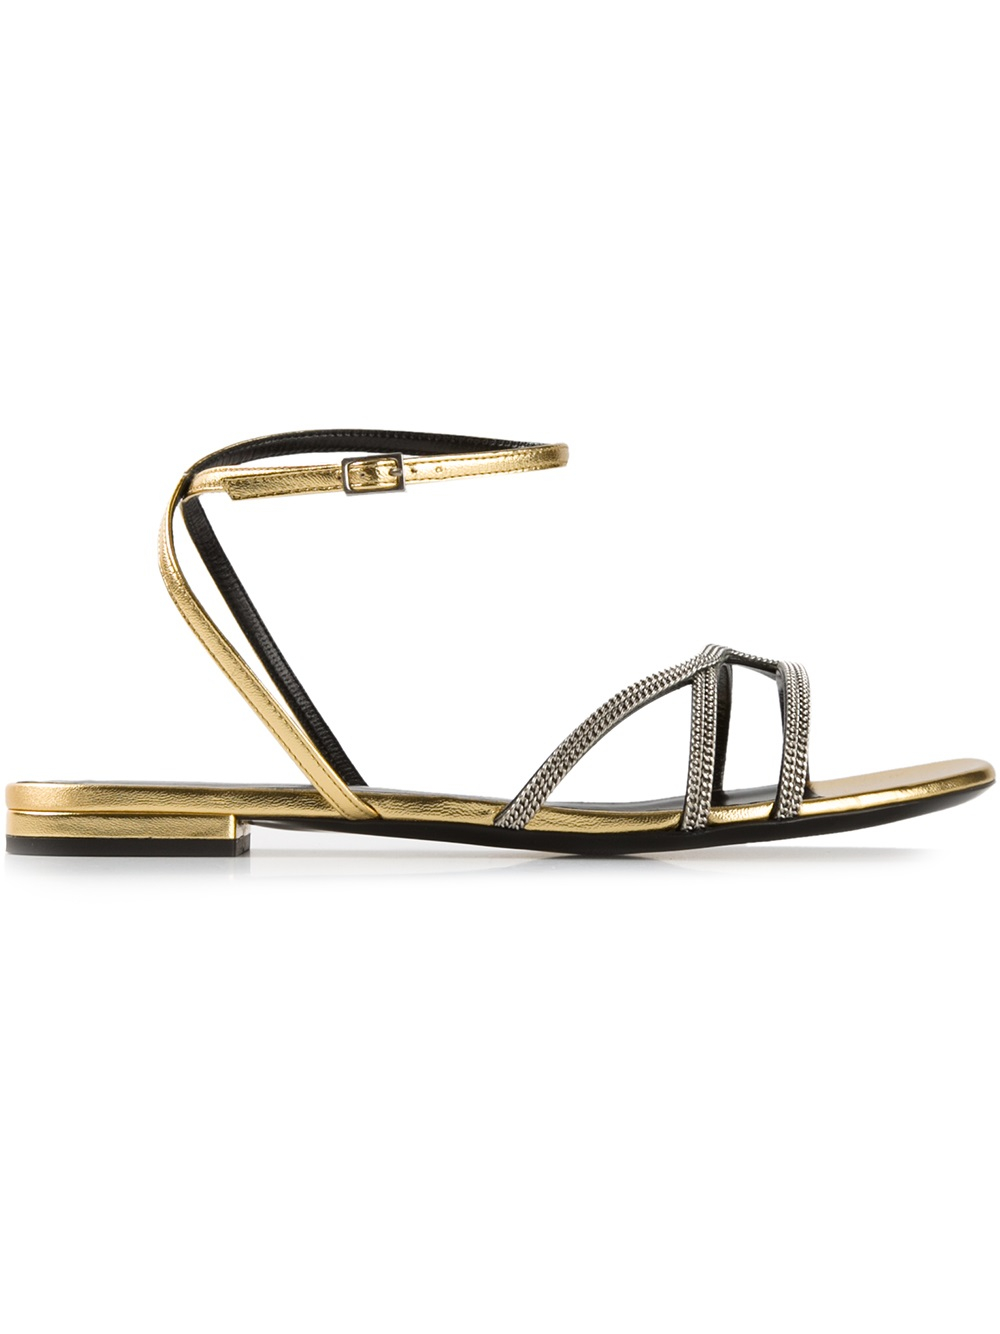 Saint Laurent Chain Detail Sandal in Gold (metallic) | Lyst